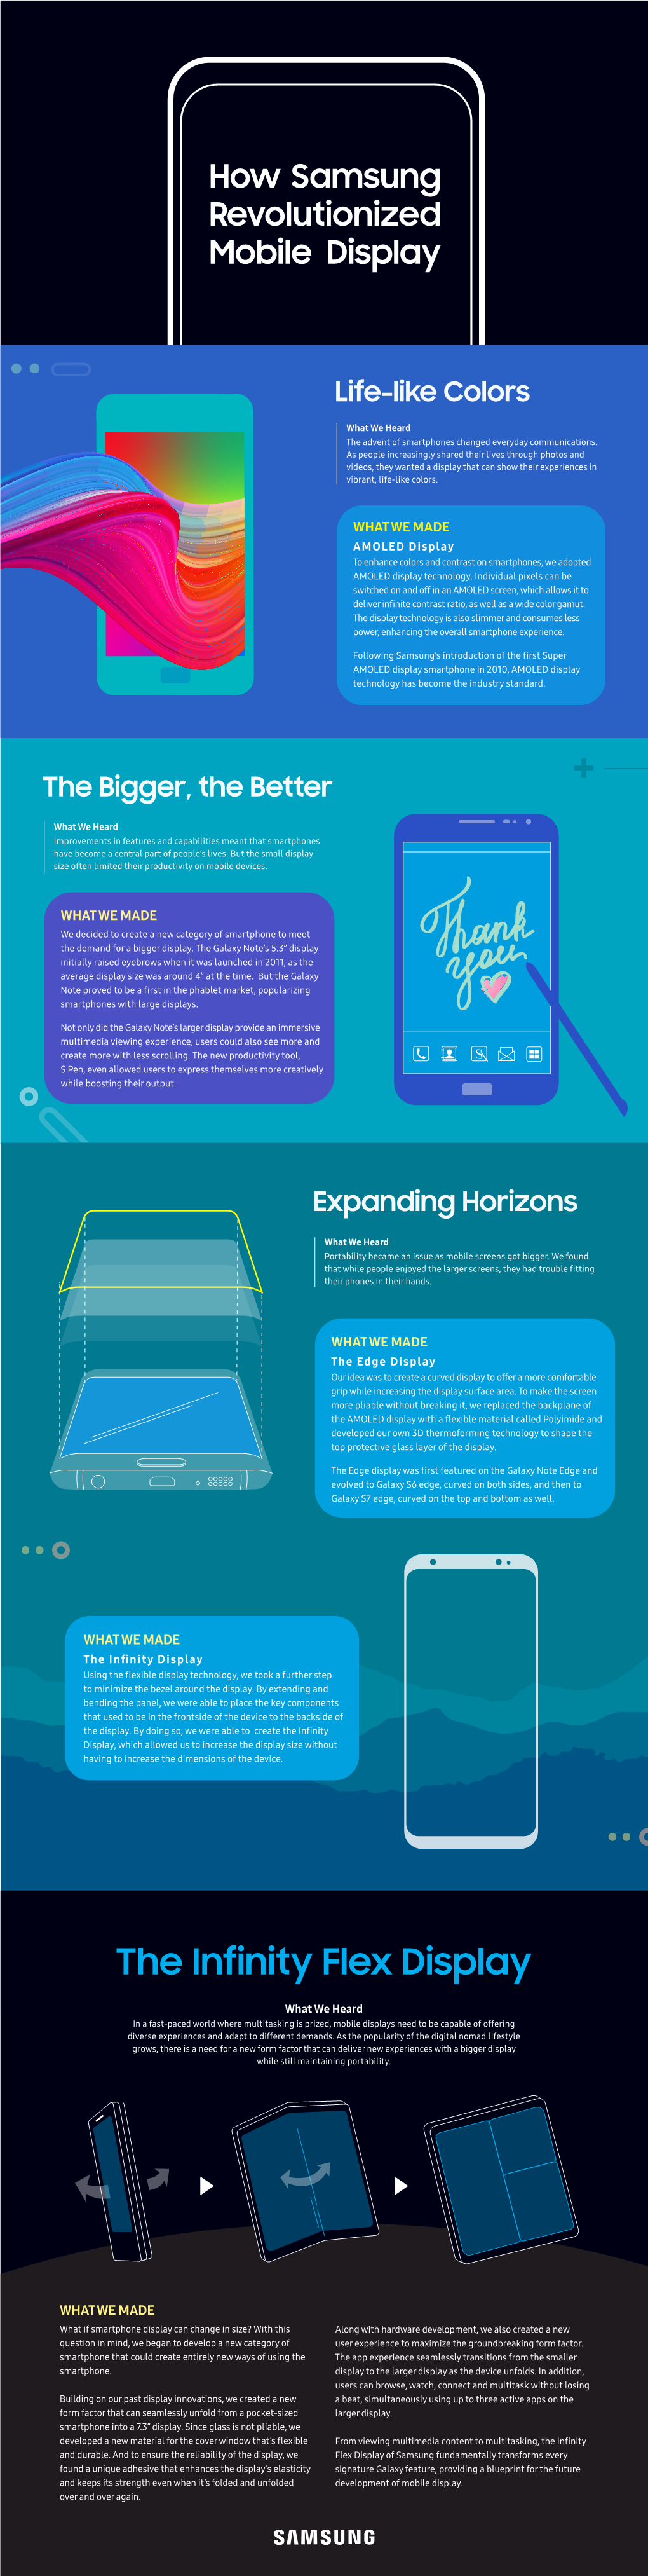 How Samsung Revolutionized Mobile Display